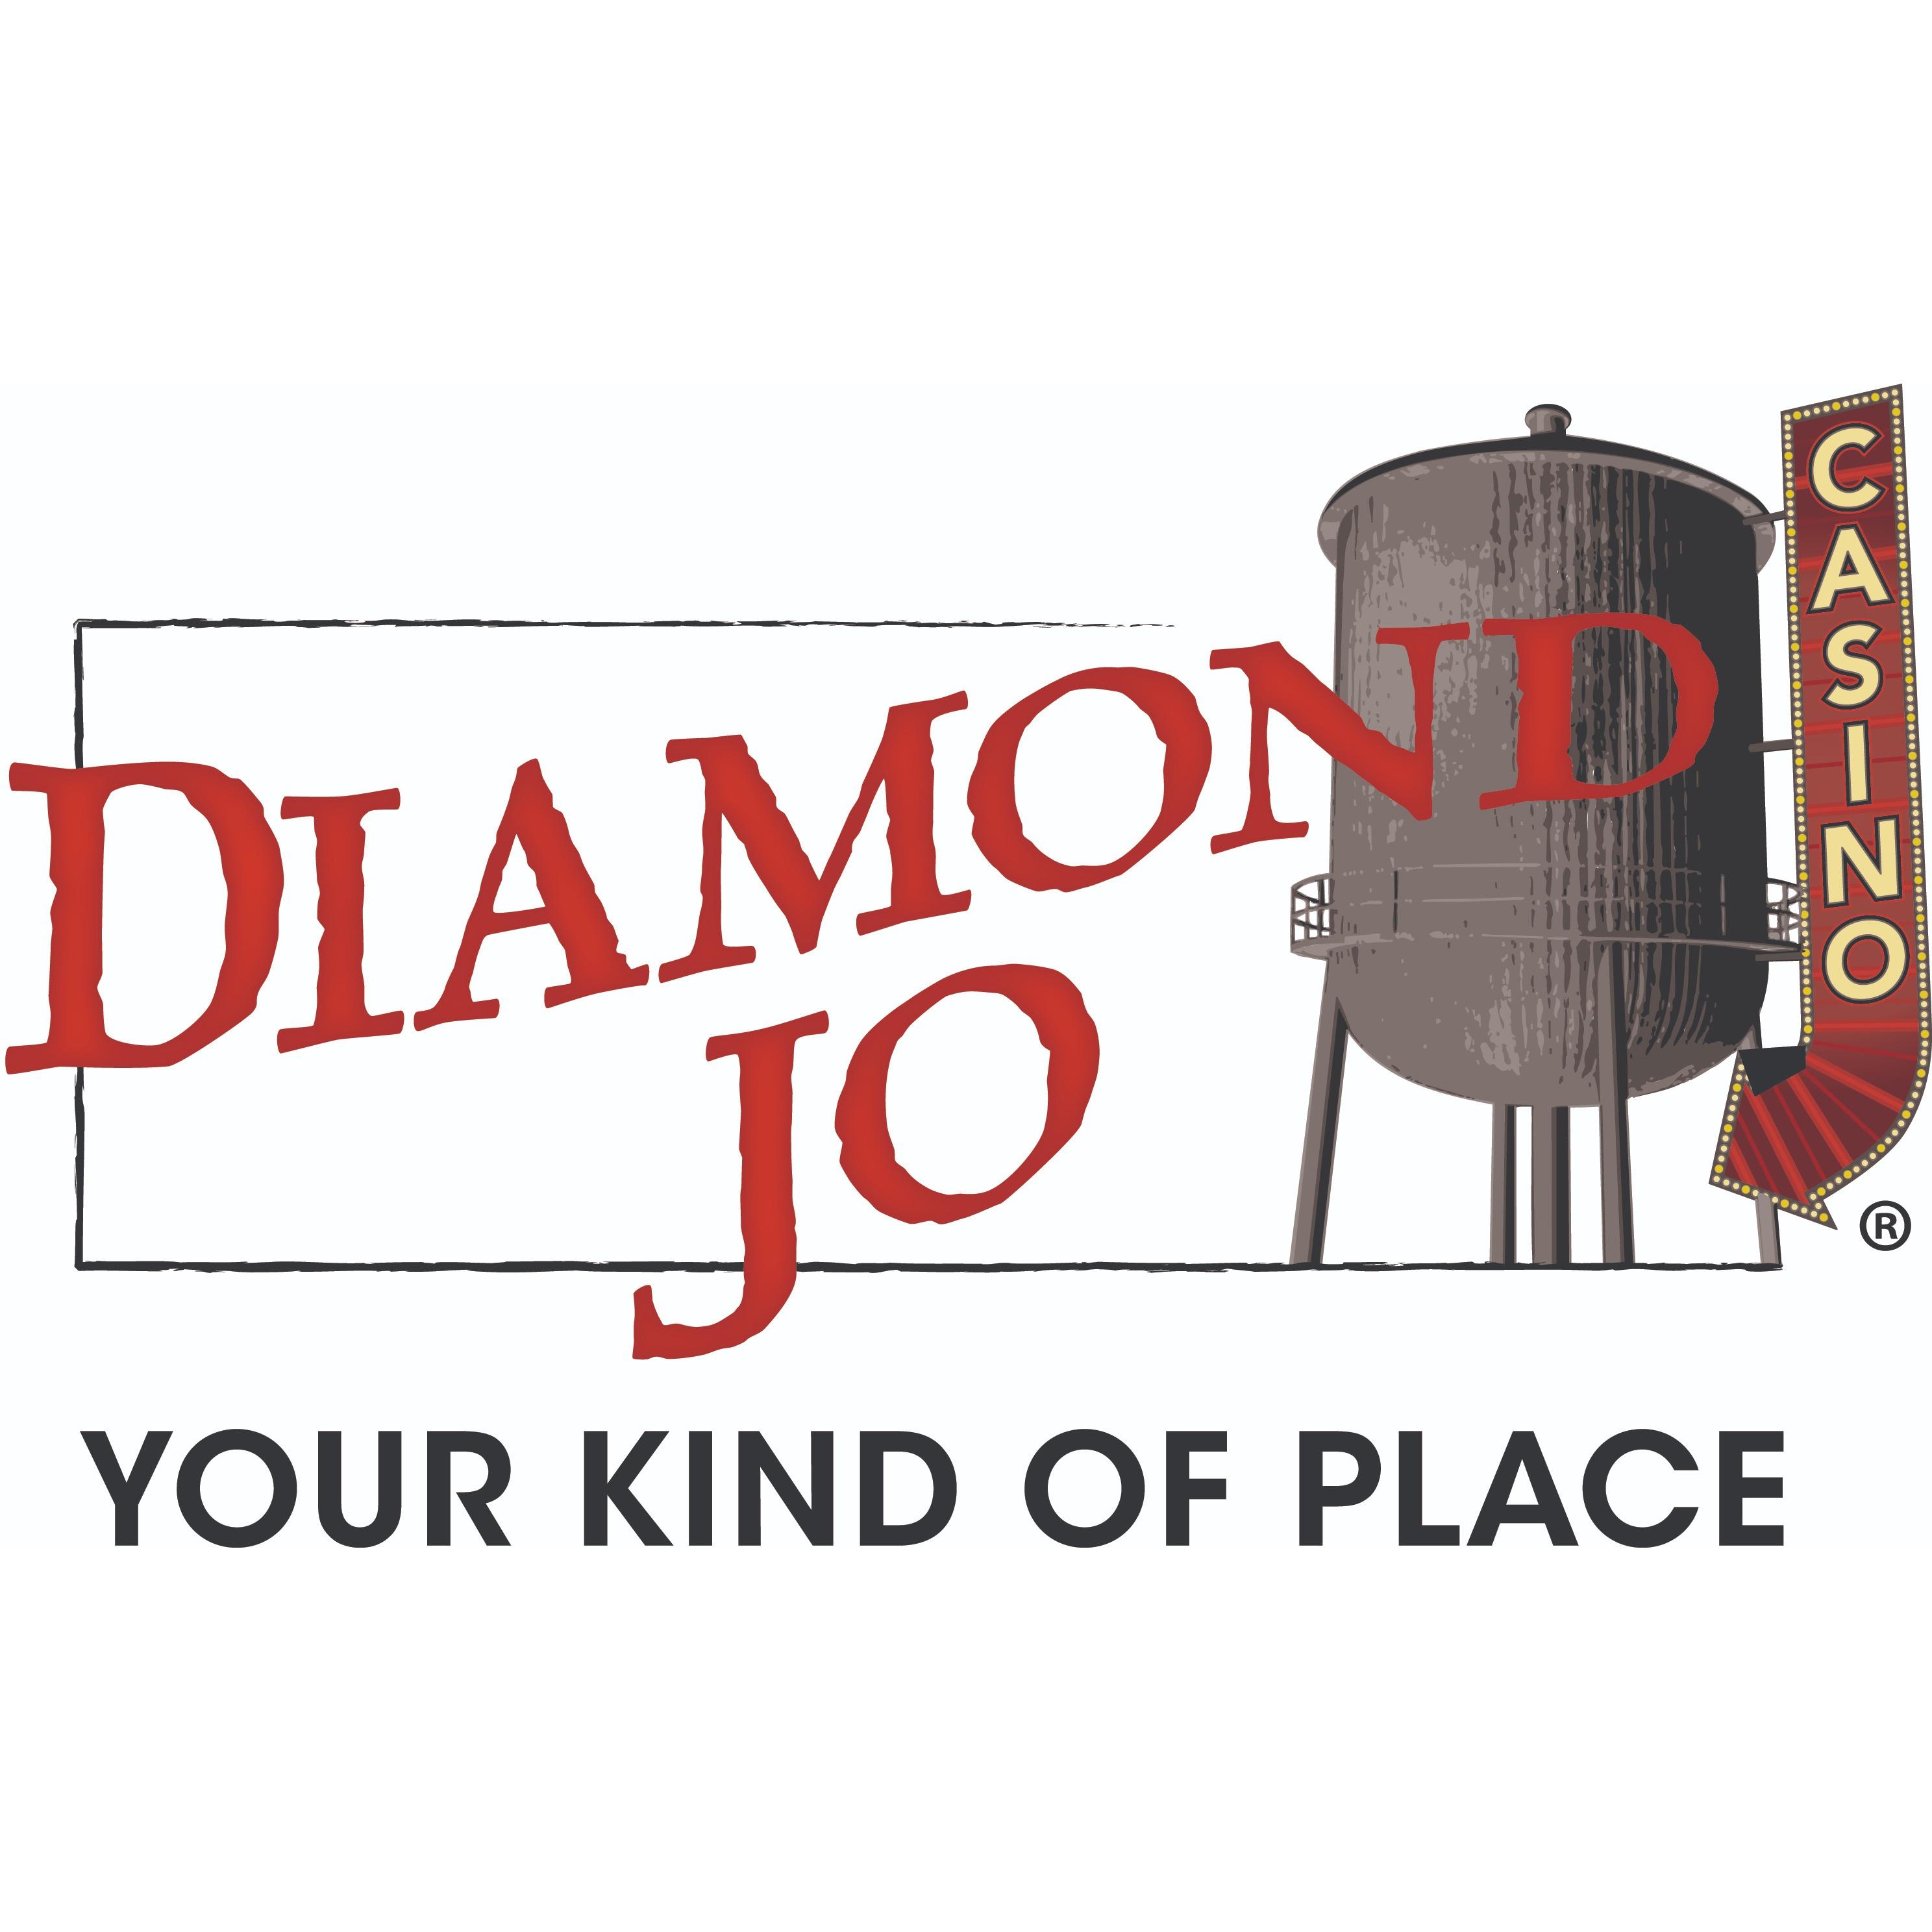 directions to diamond jo casino